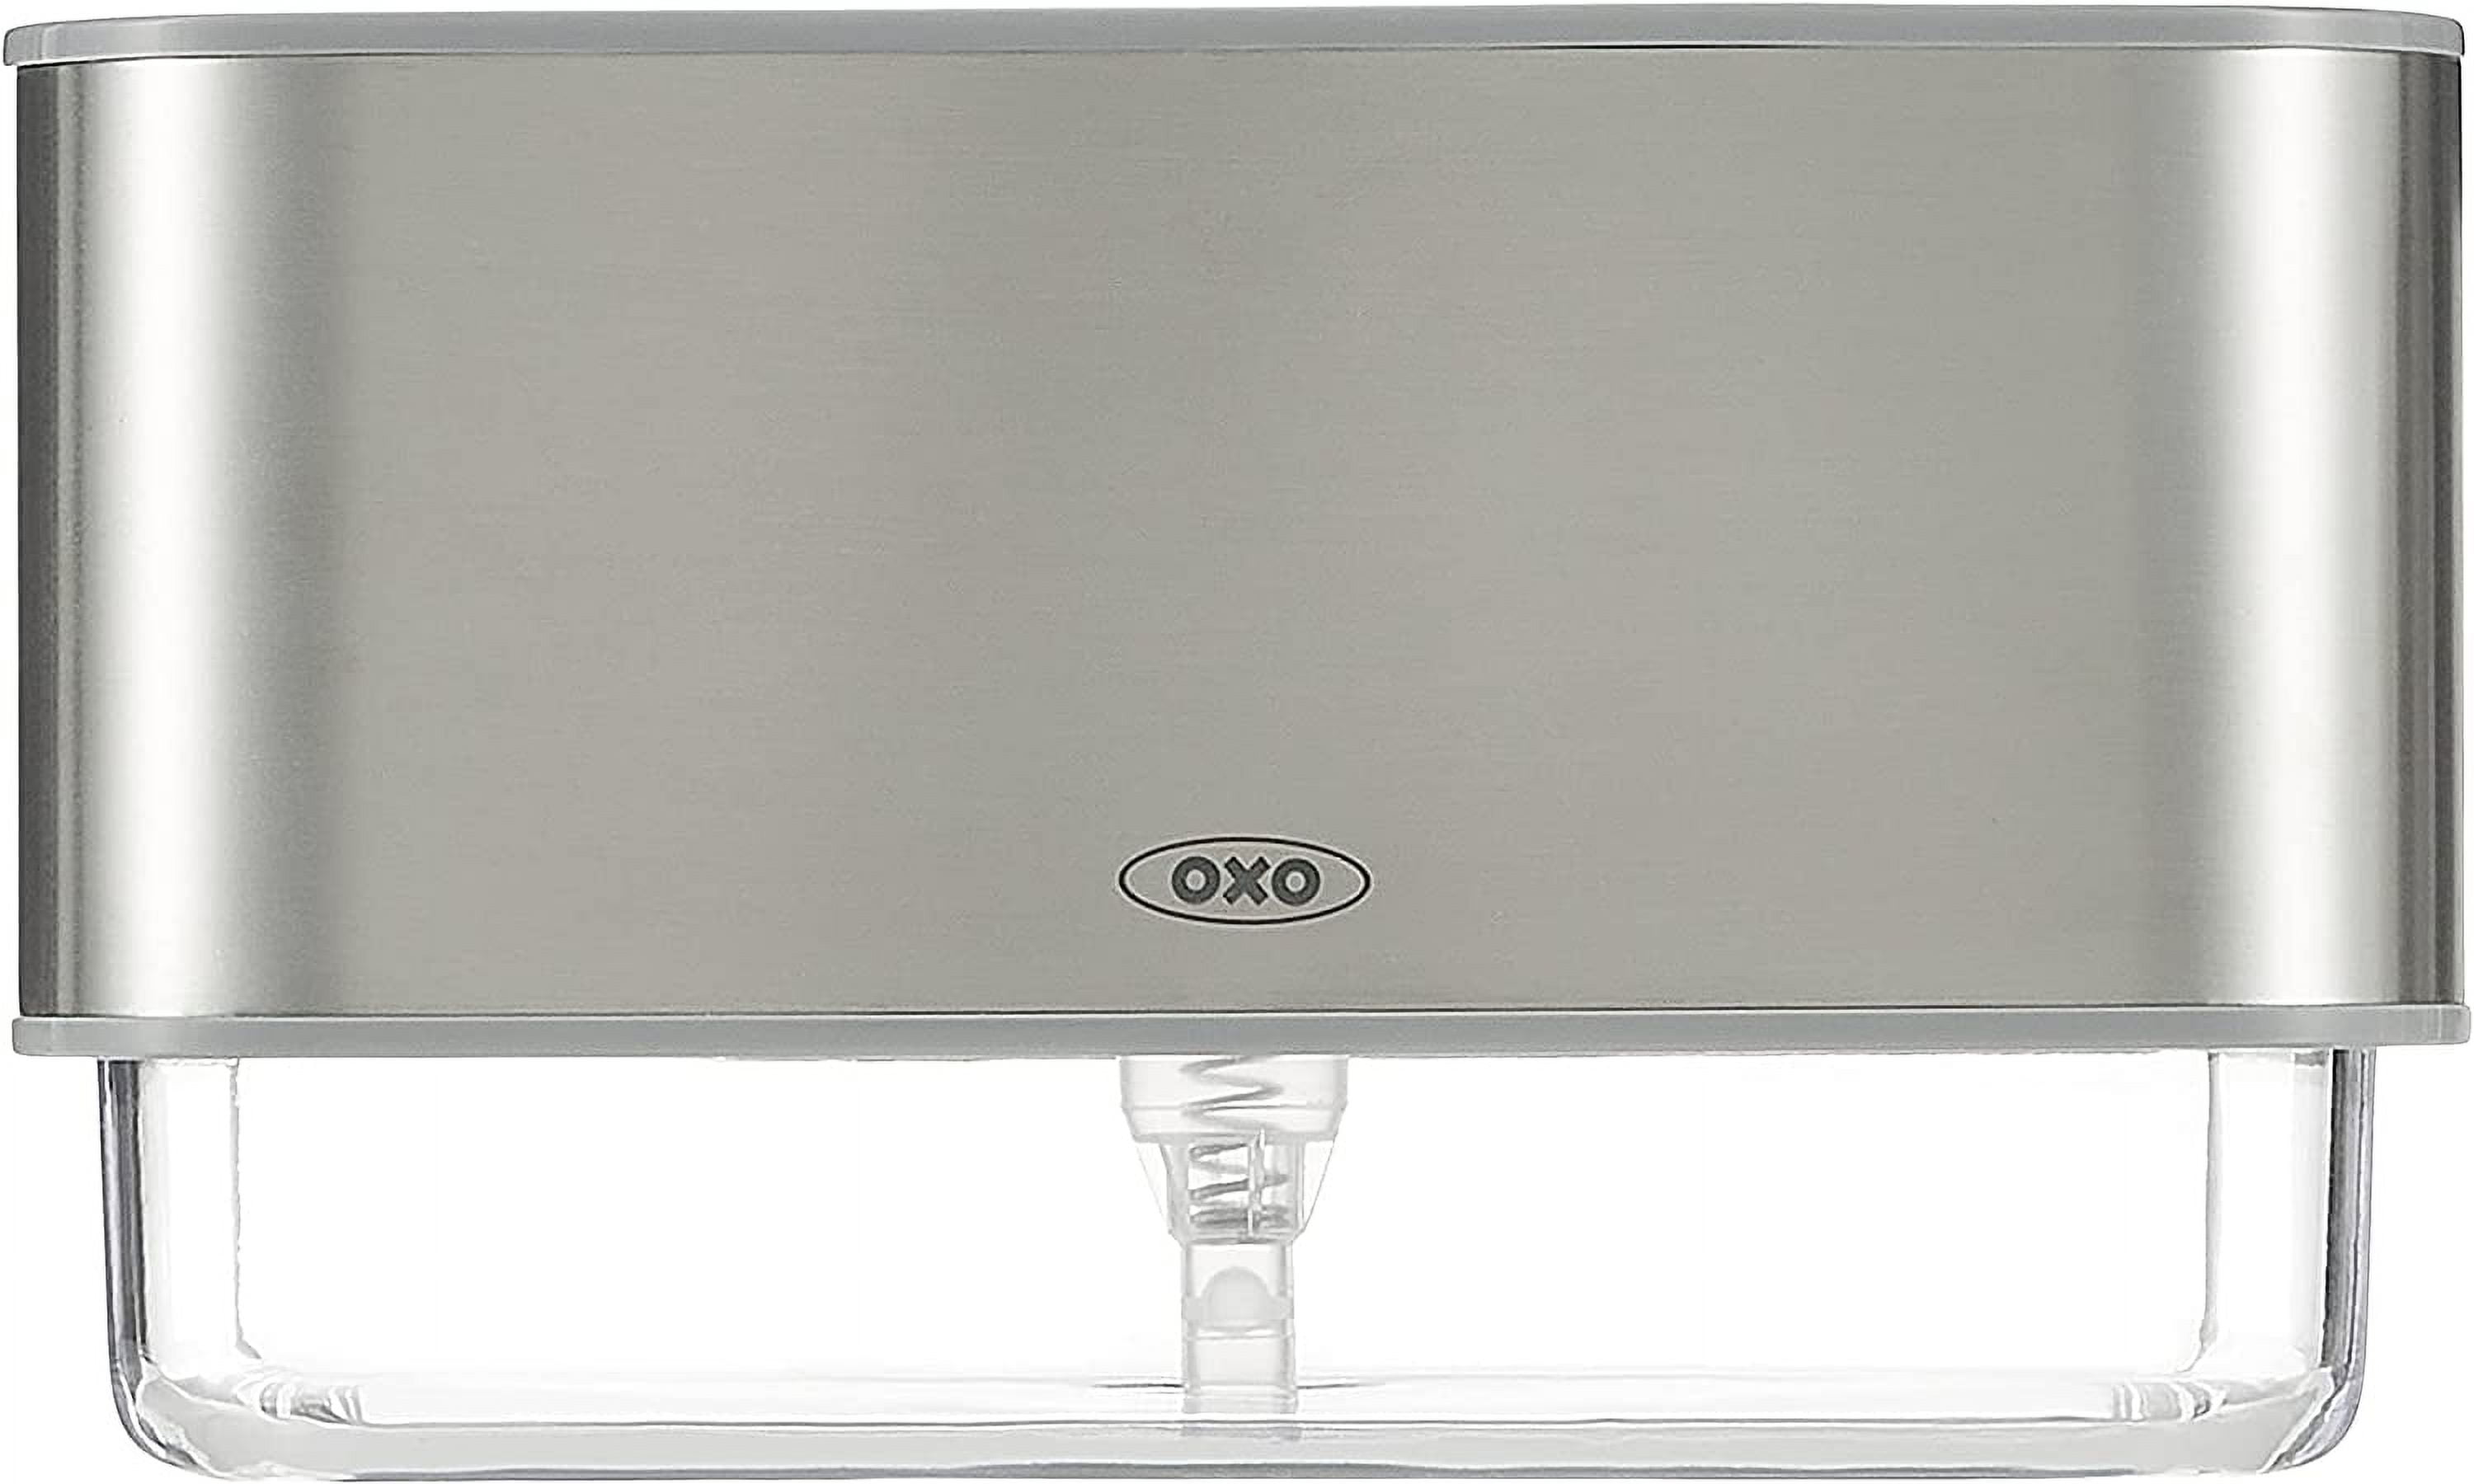 OXO GG SOAP DISPENSING DISH SPONGE - Main Street Kitchens